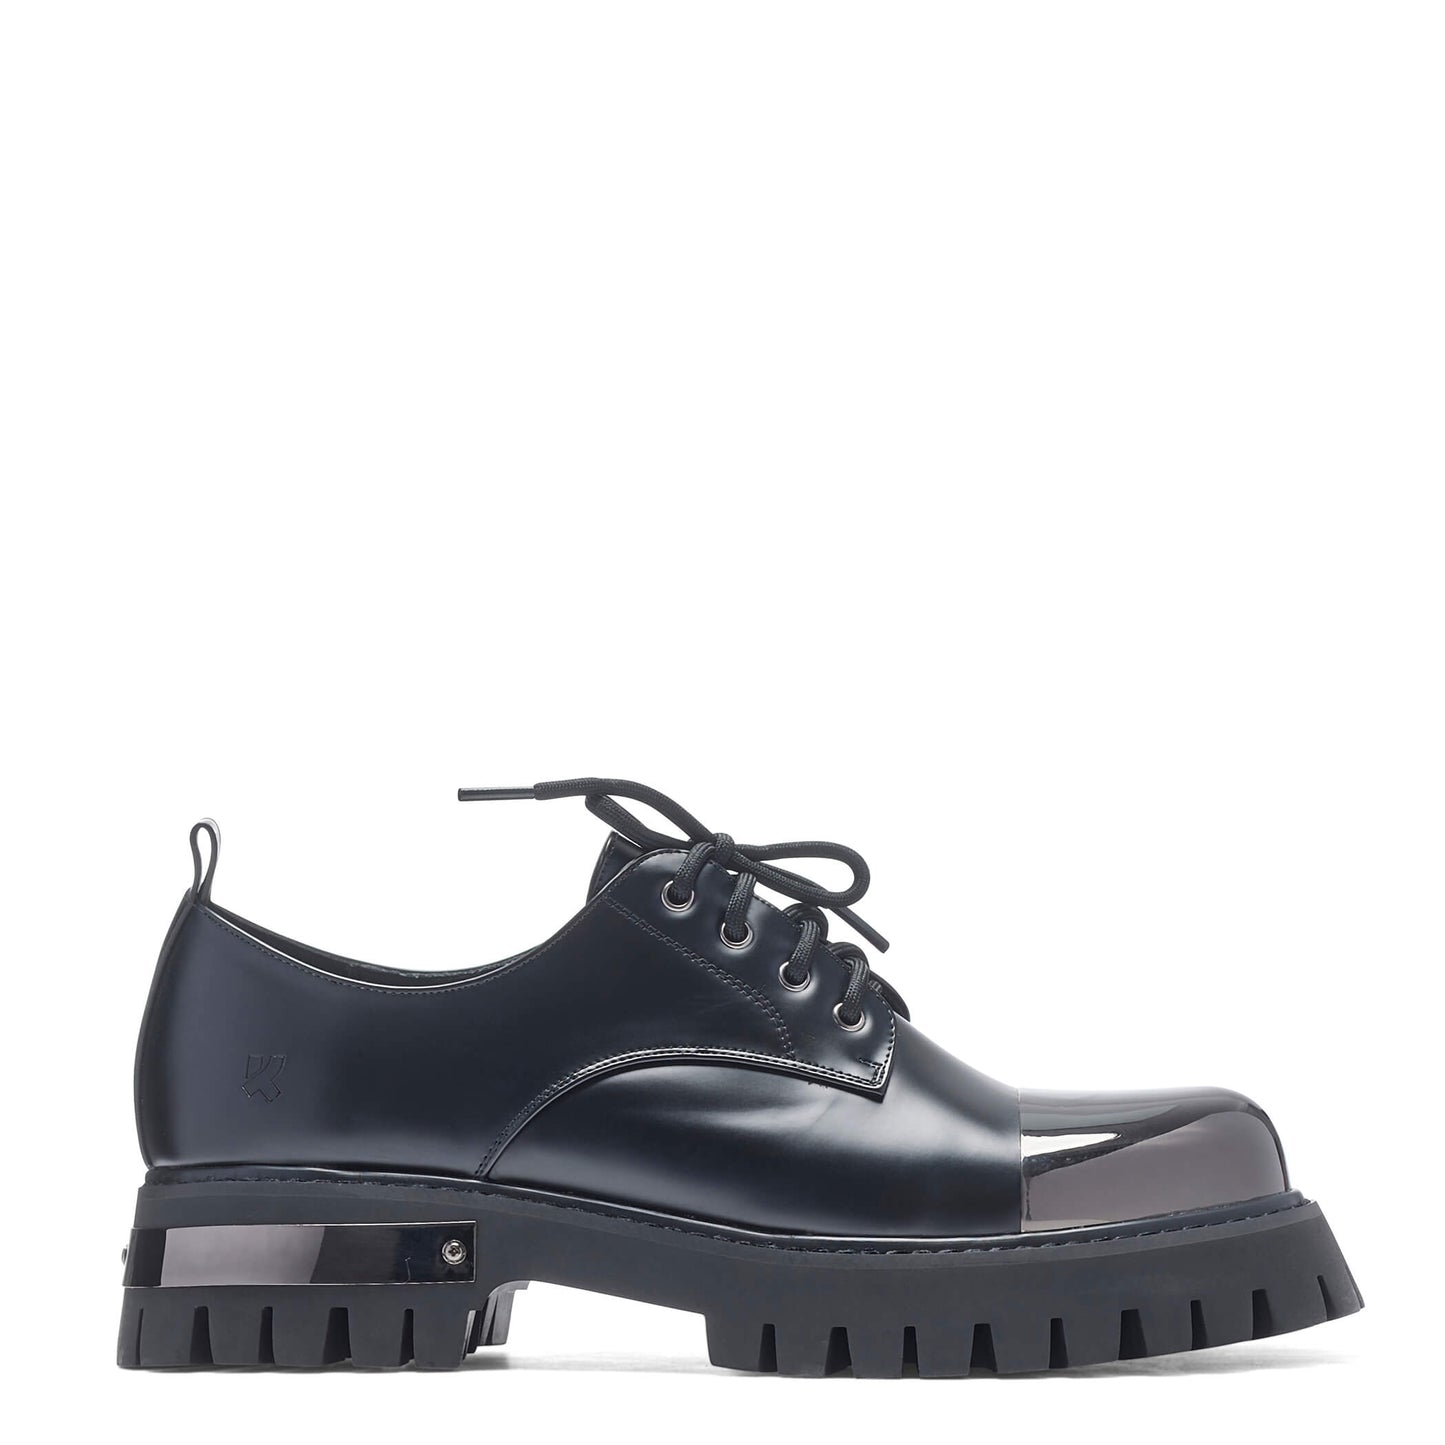 Shelob Men's Metal Toe Cap Shoes - Shoes - KOI Footwear - Black - Side View